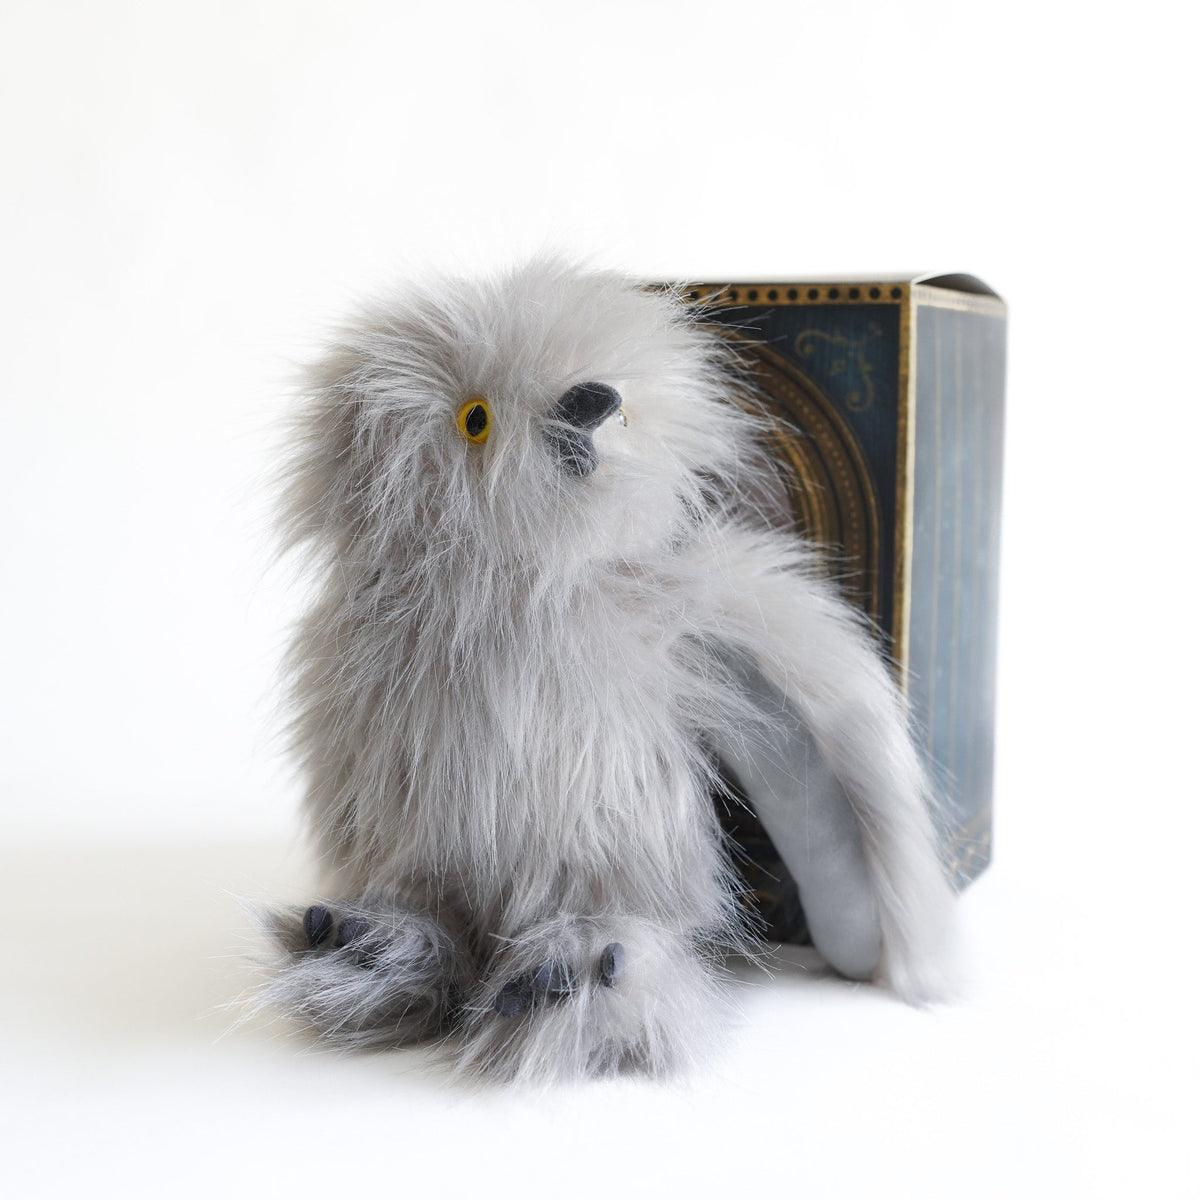 Adopt a Magical Gray Owl Plush is a super fluffy gray owl stuffed animal 